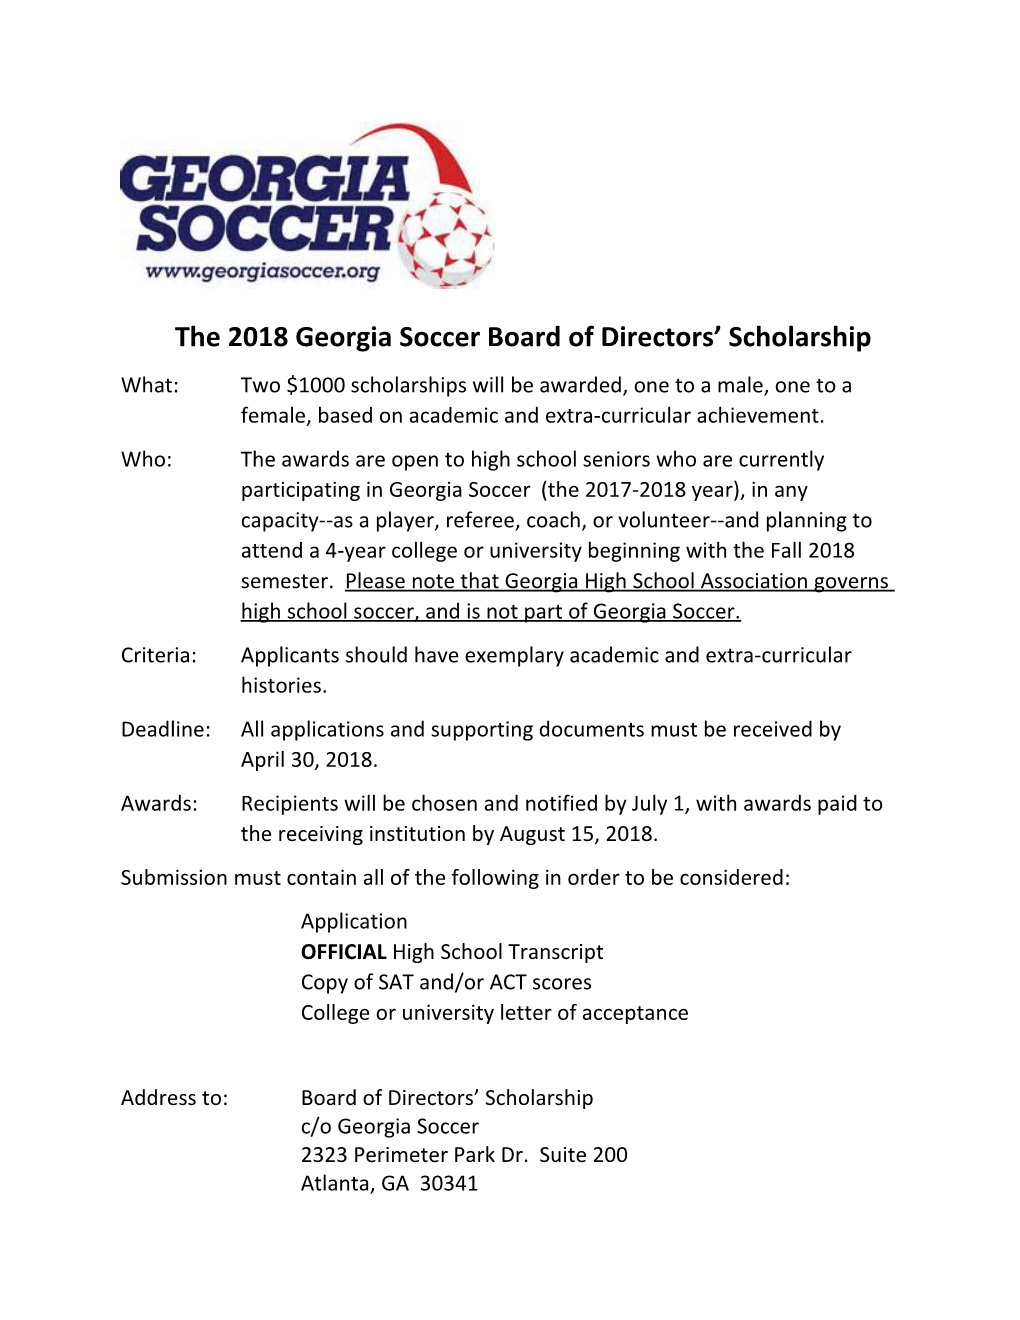 The 2018 Georgia Soccer Board of Directors Scholarship